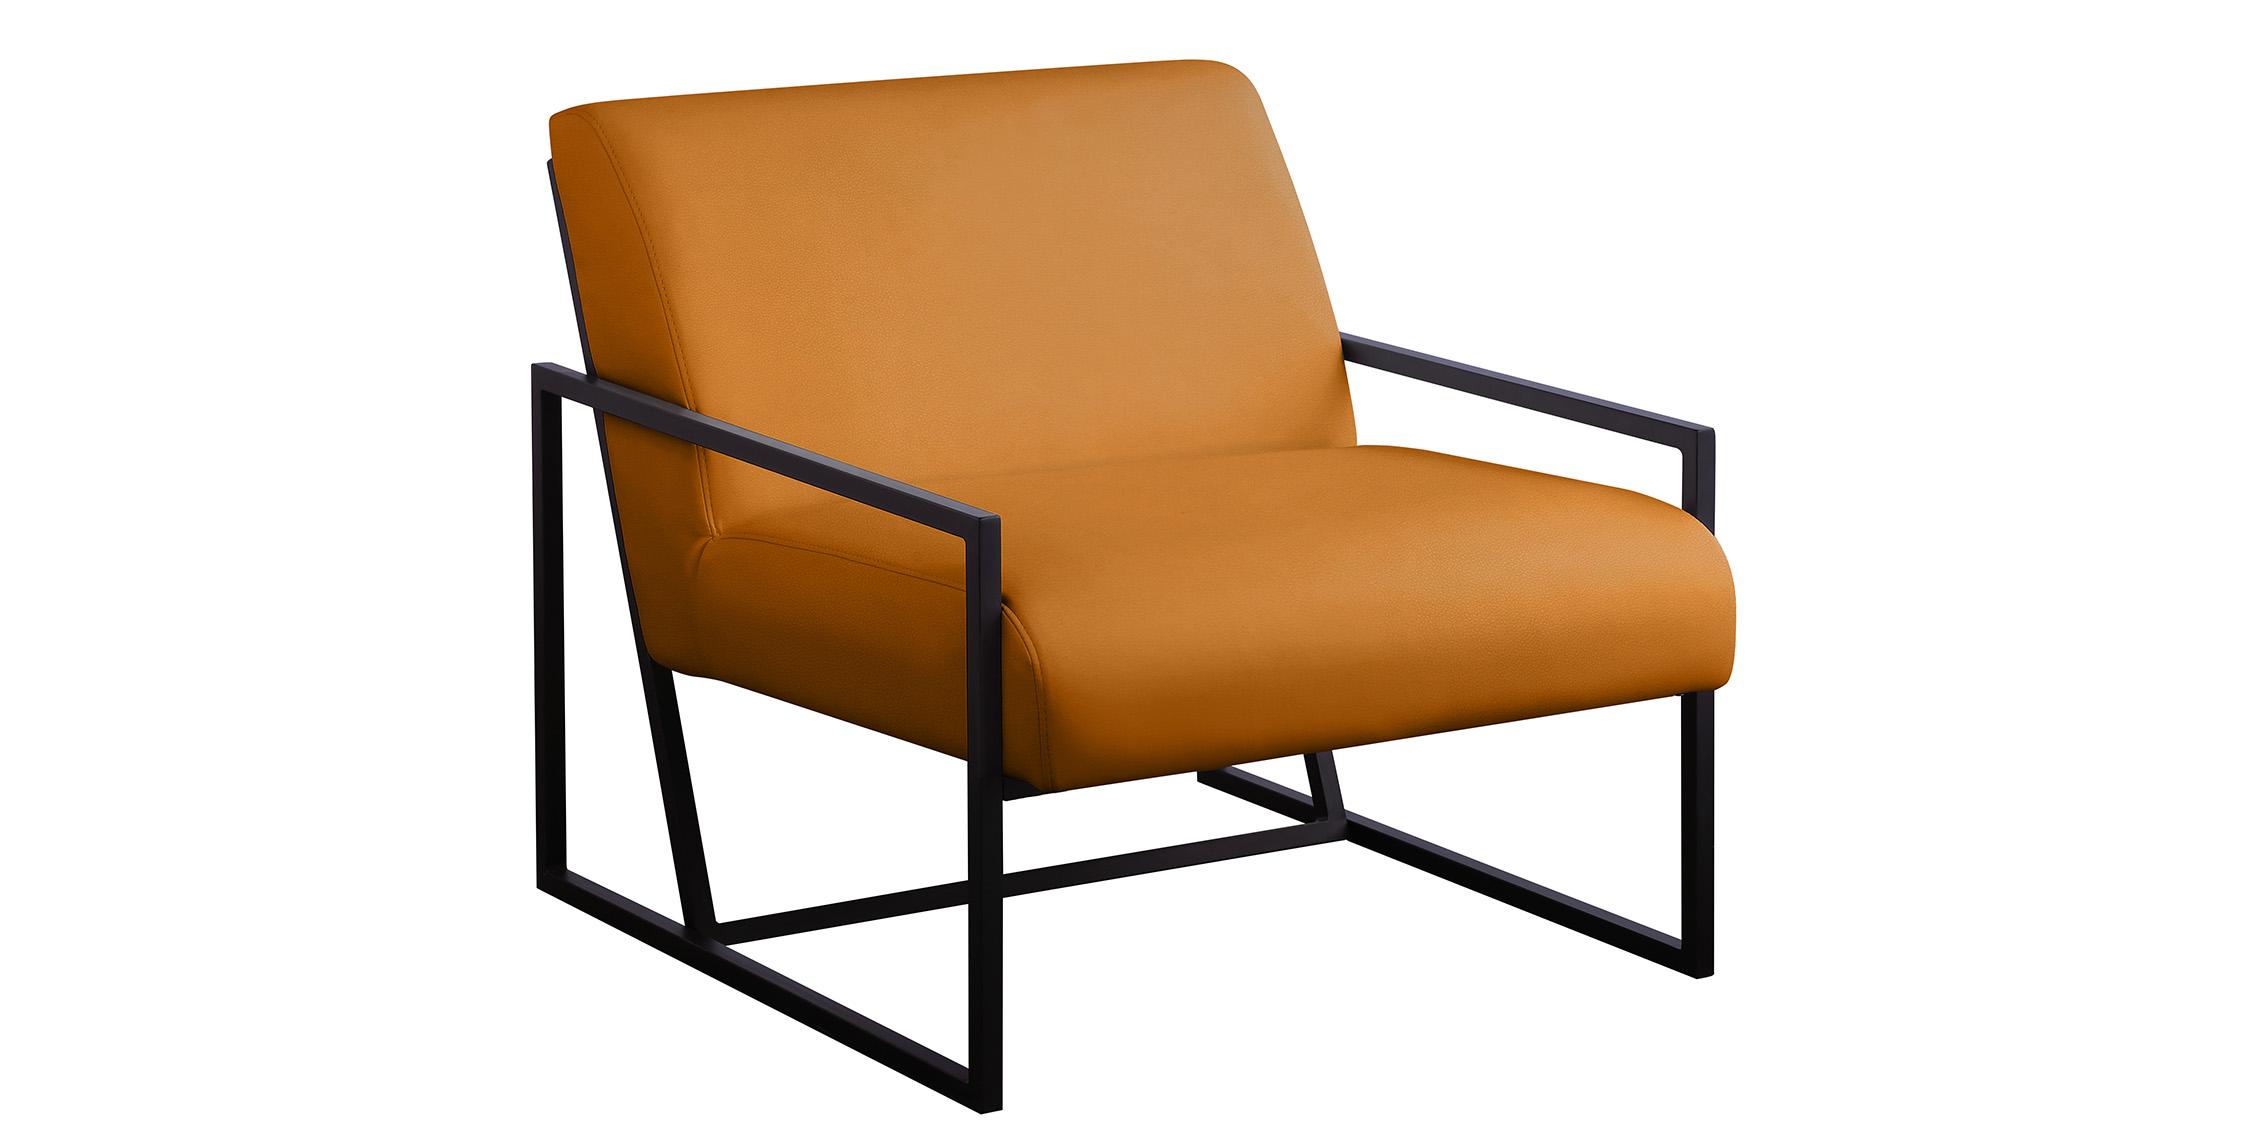 Contemporary Accent Chair INDUSTRY 535Cognac 535Cognac in Cognac, Black Faux Leather